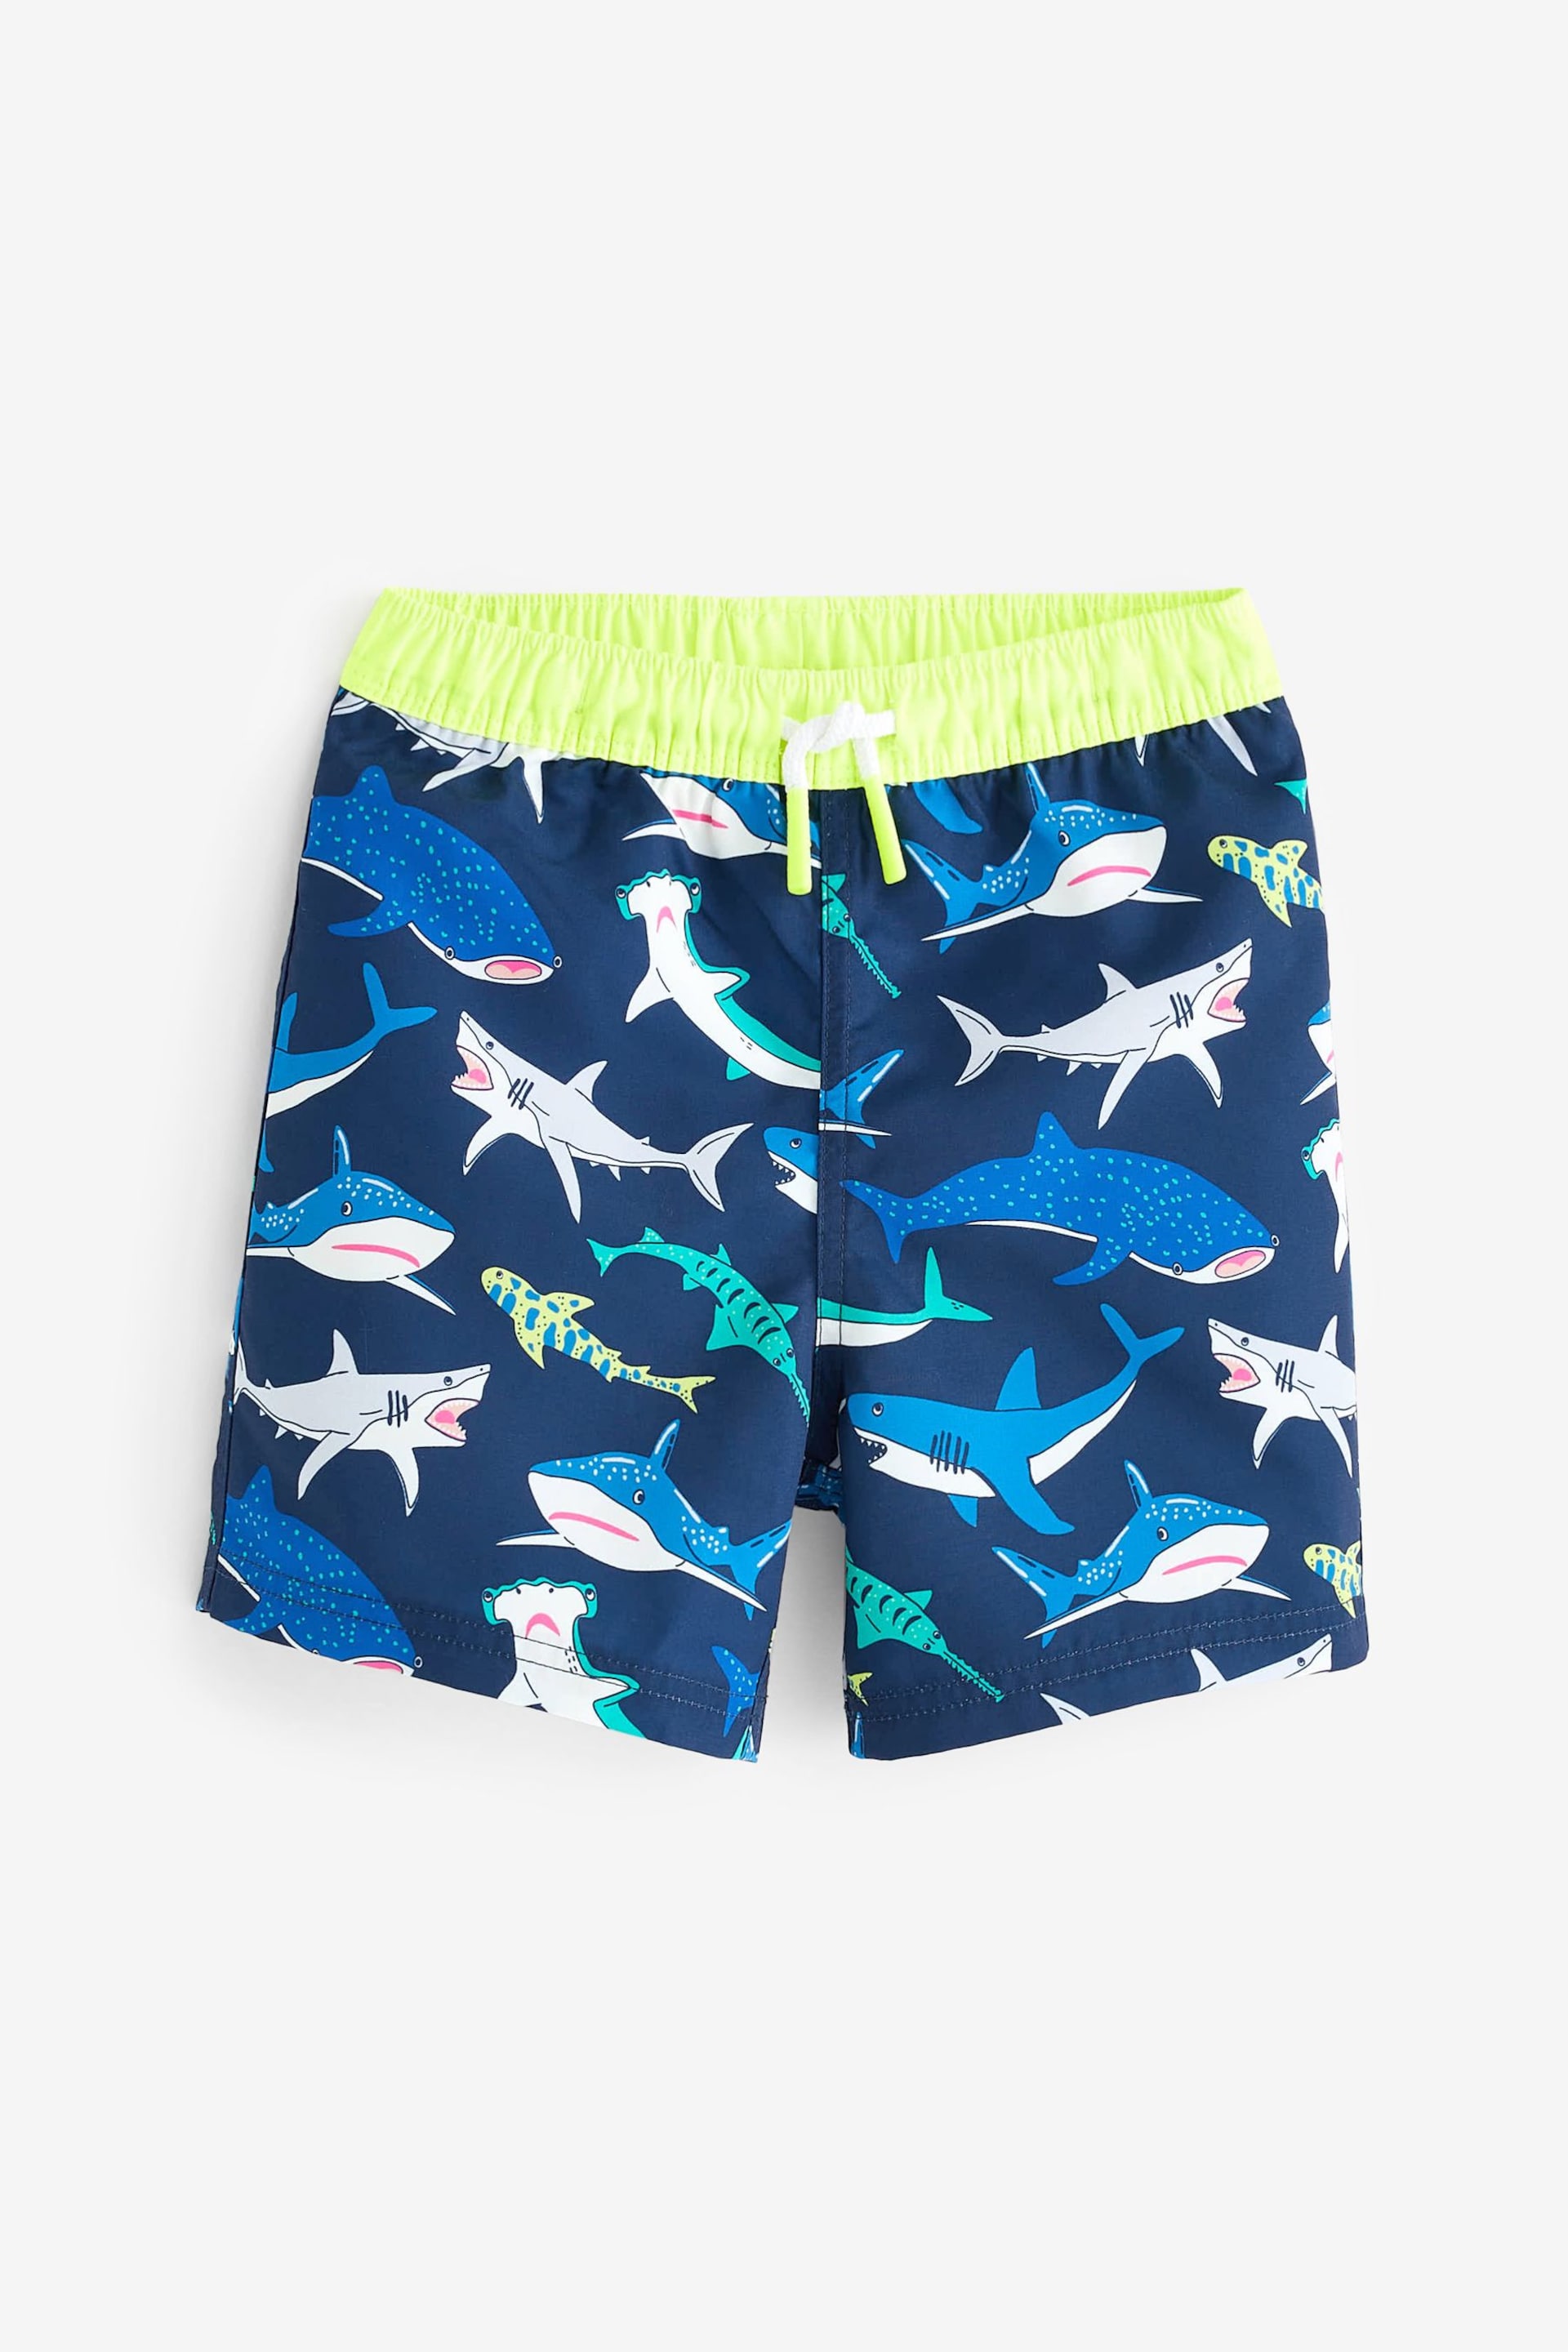 Boden Blue Swim Shorts - Image 1 of 4